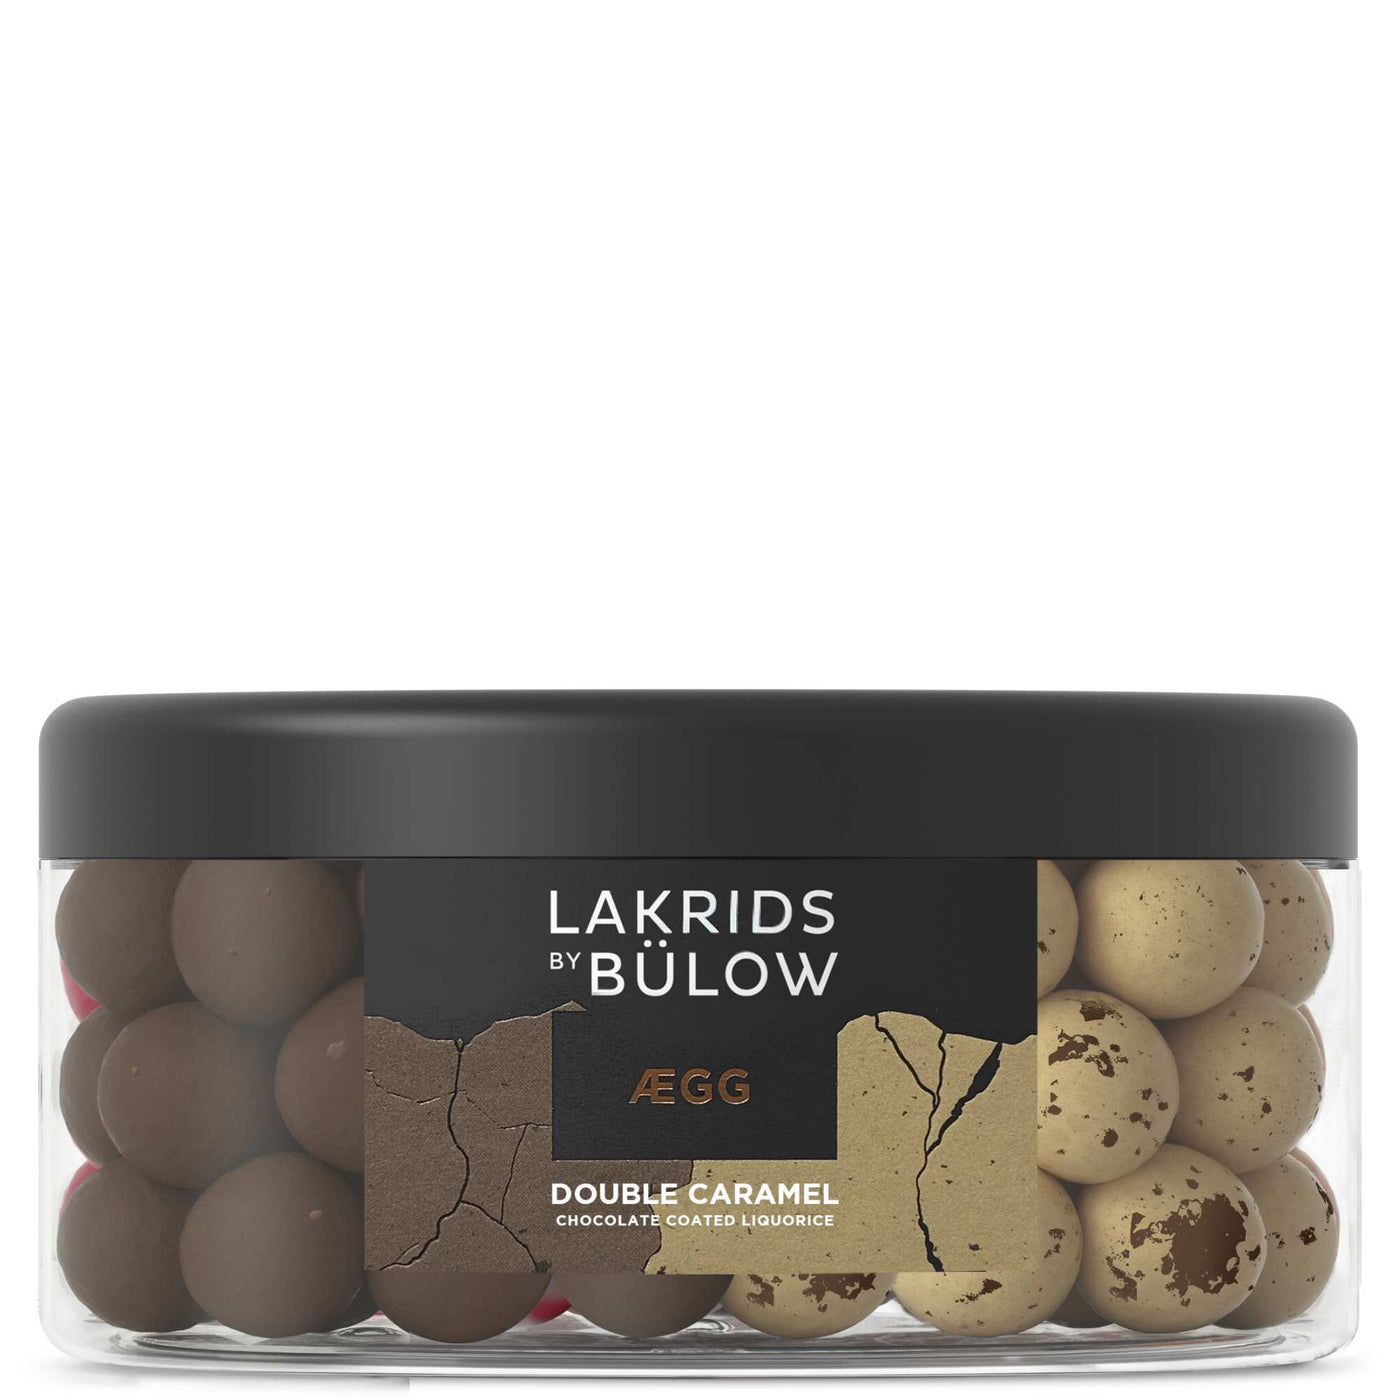 Lakrids Mixed Crispy Caramel & Crunchy Toffee - 550g